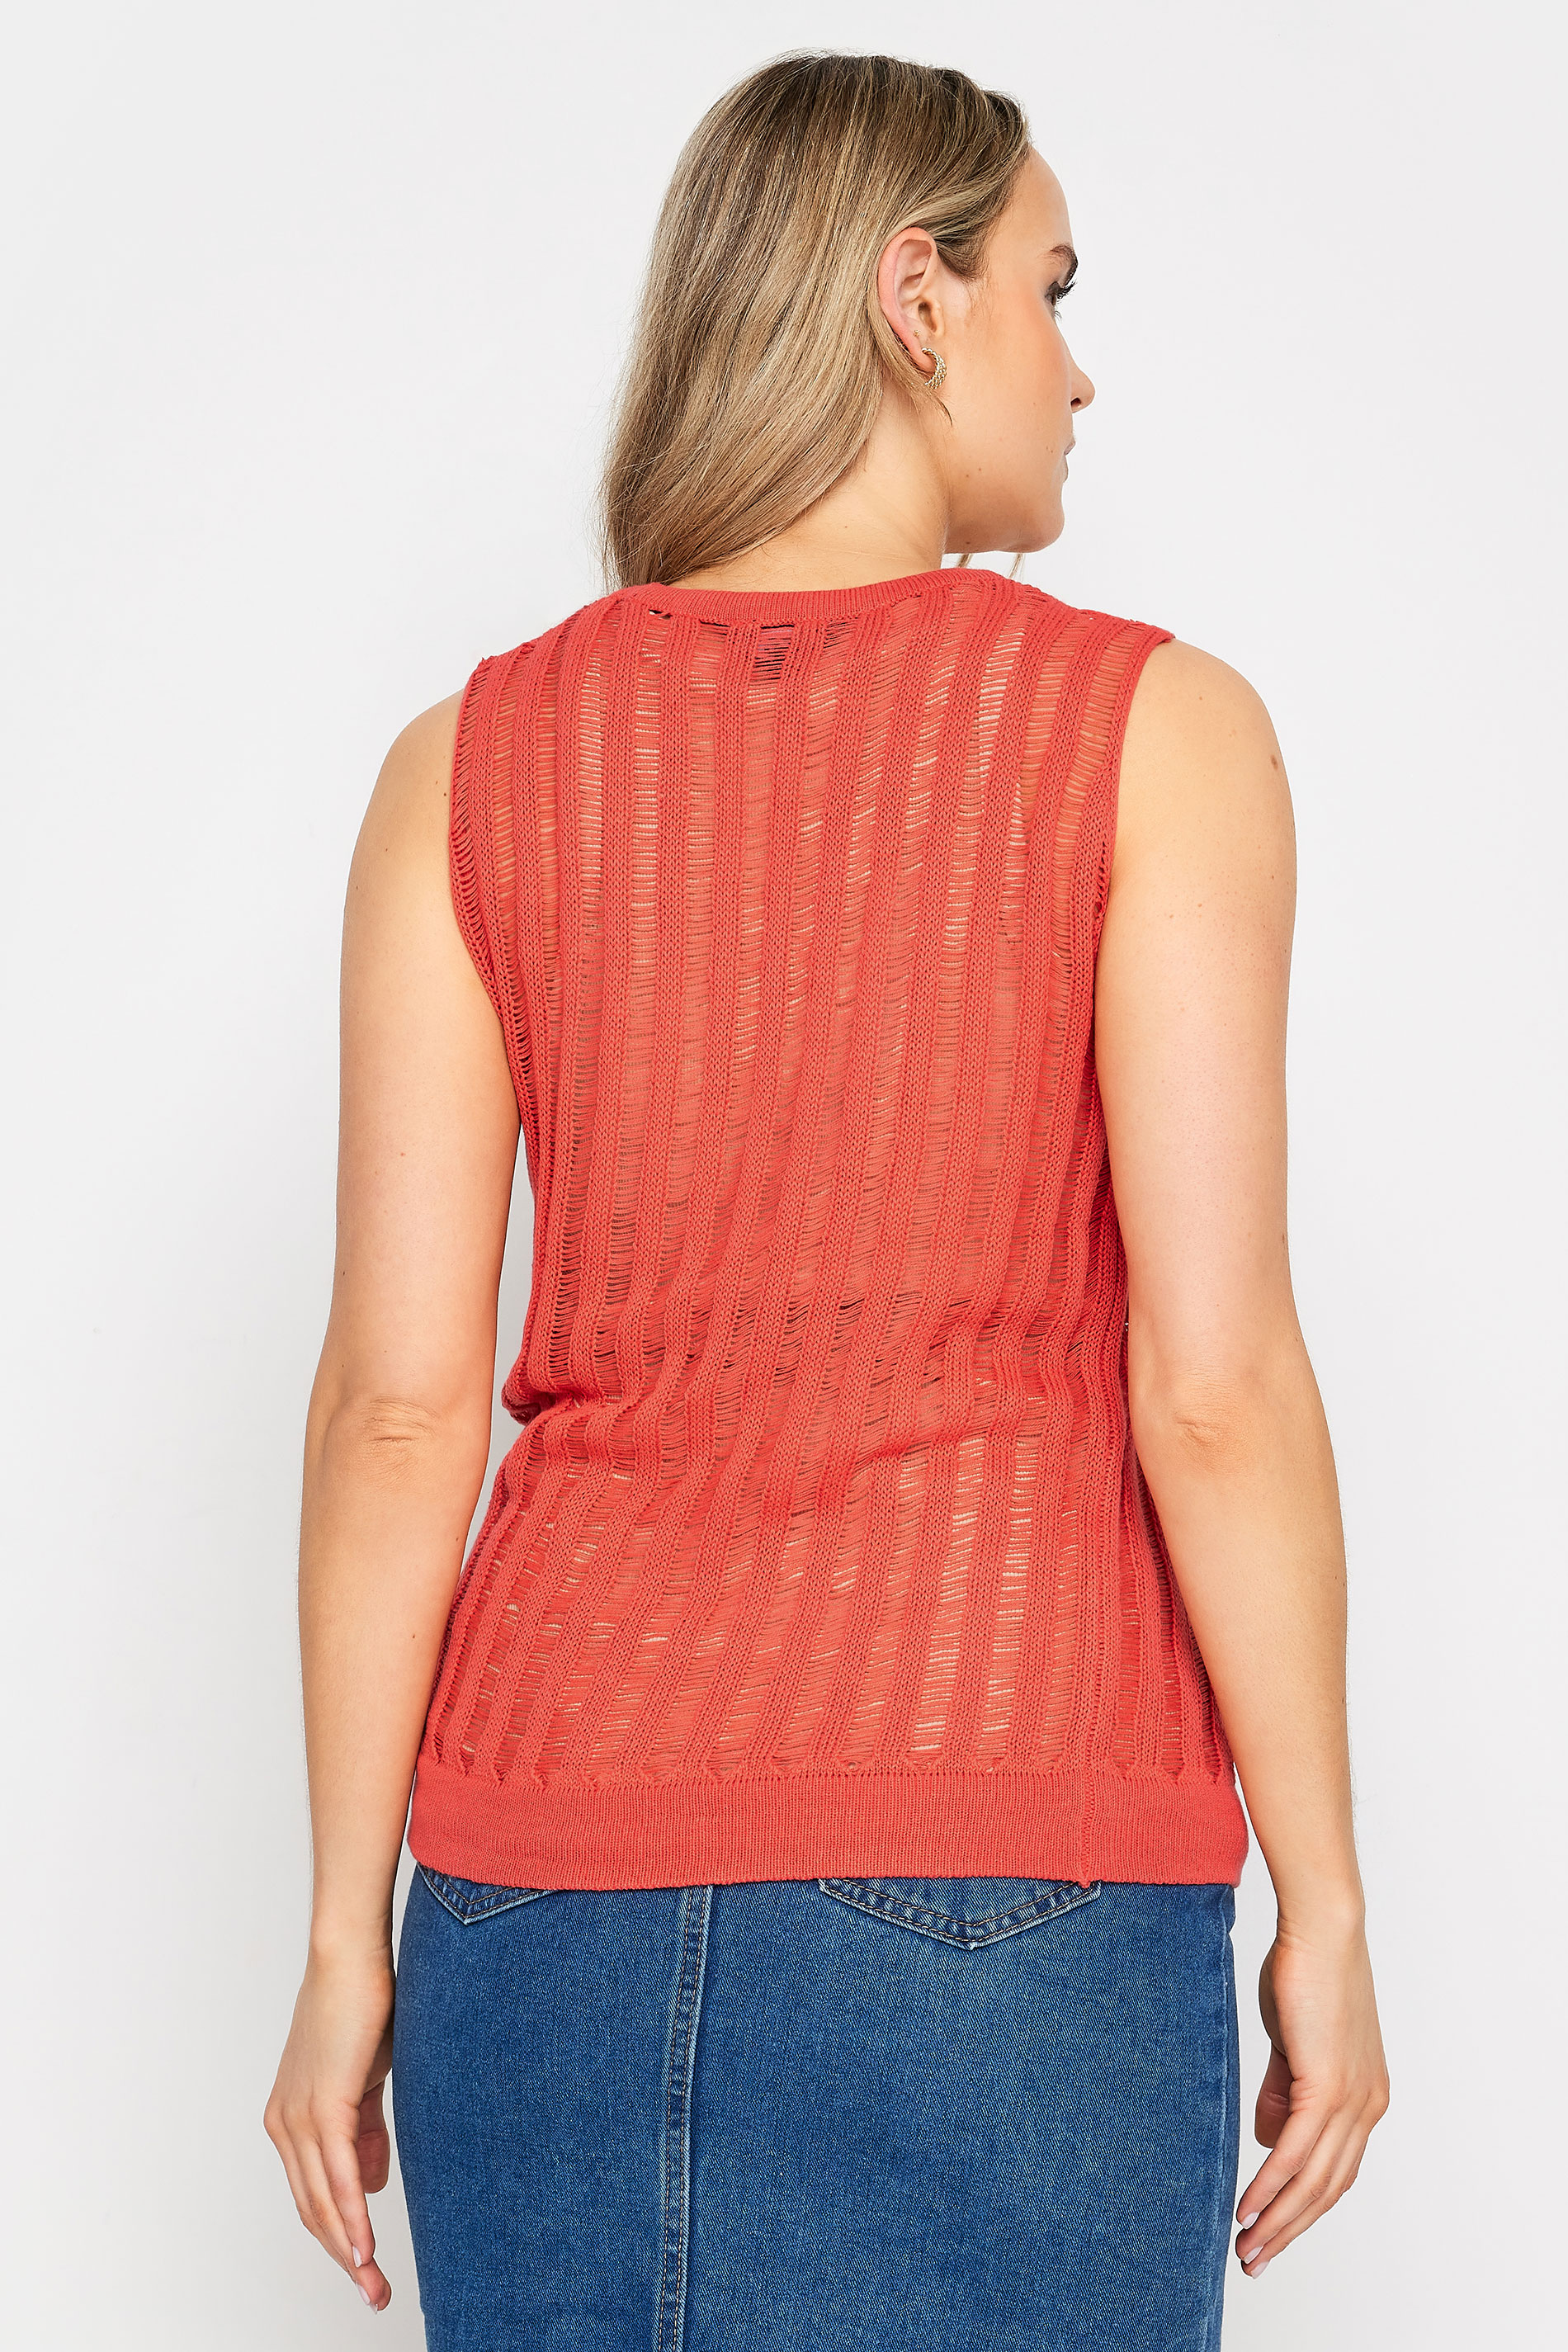 LTS Tall Women's Coral Orange Crochet Vest Top | Long Tall Sally 3